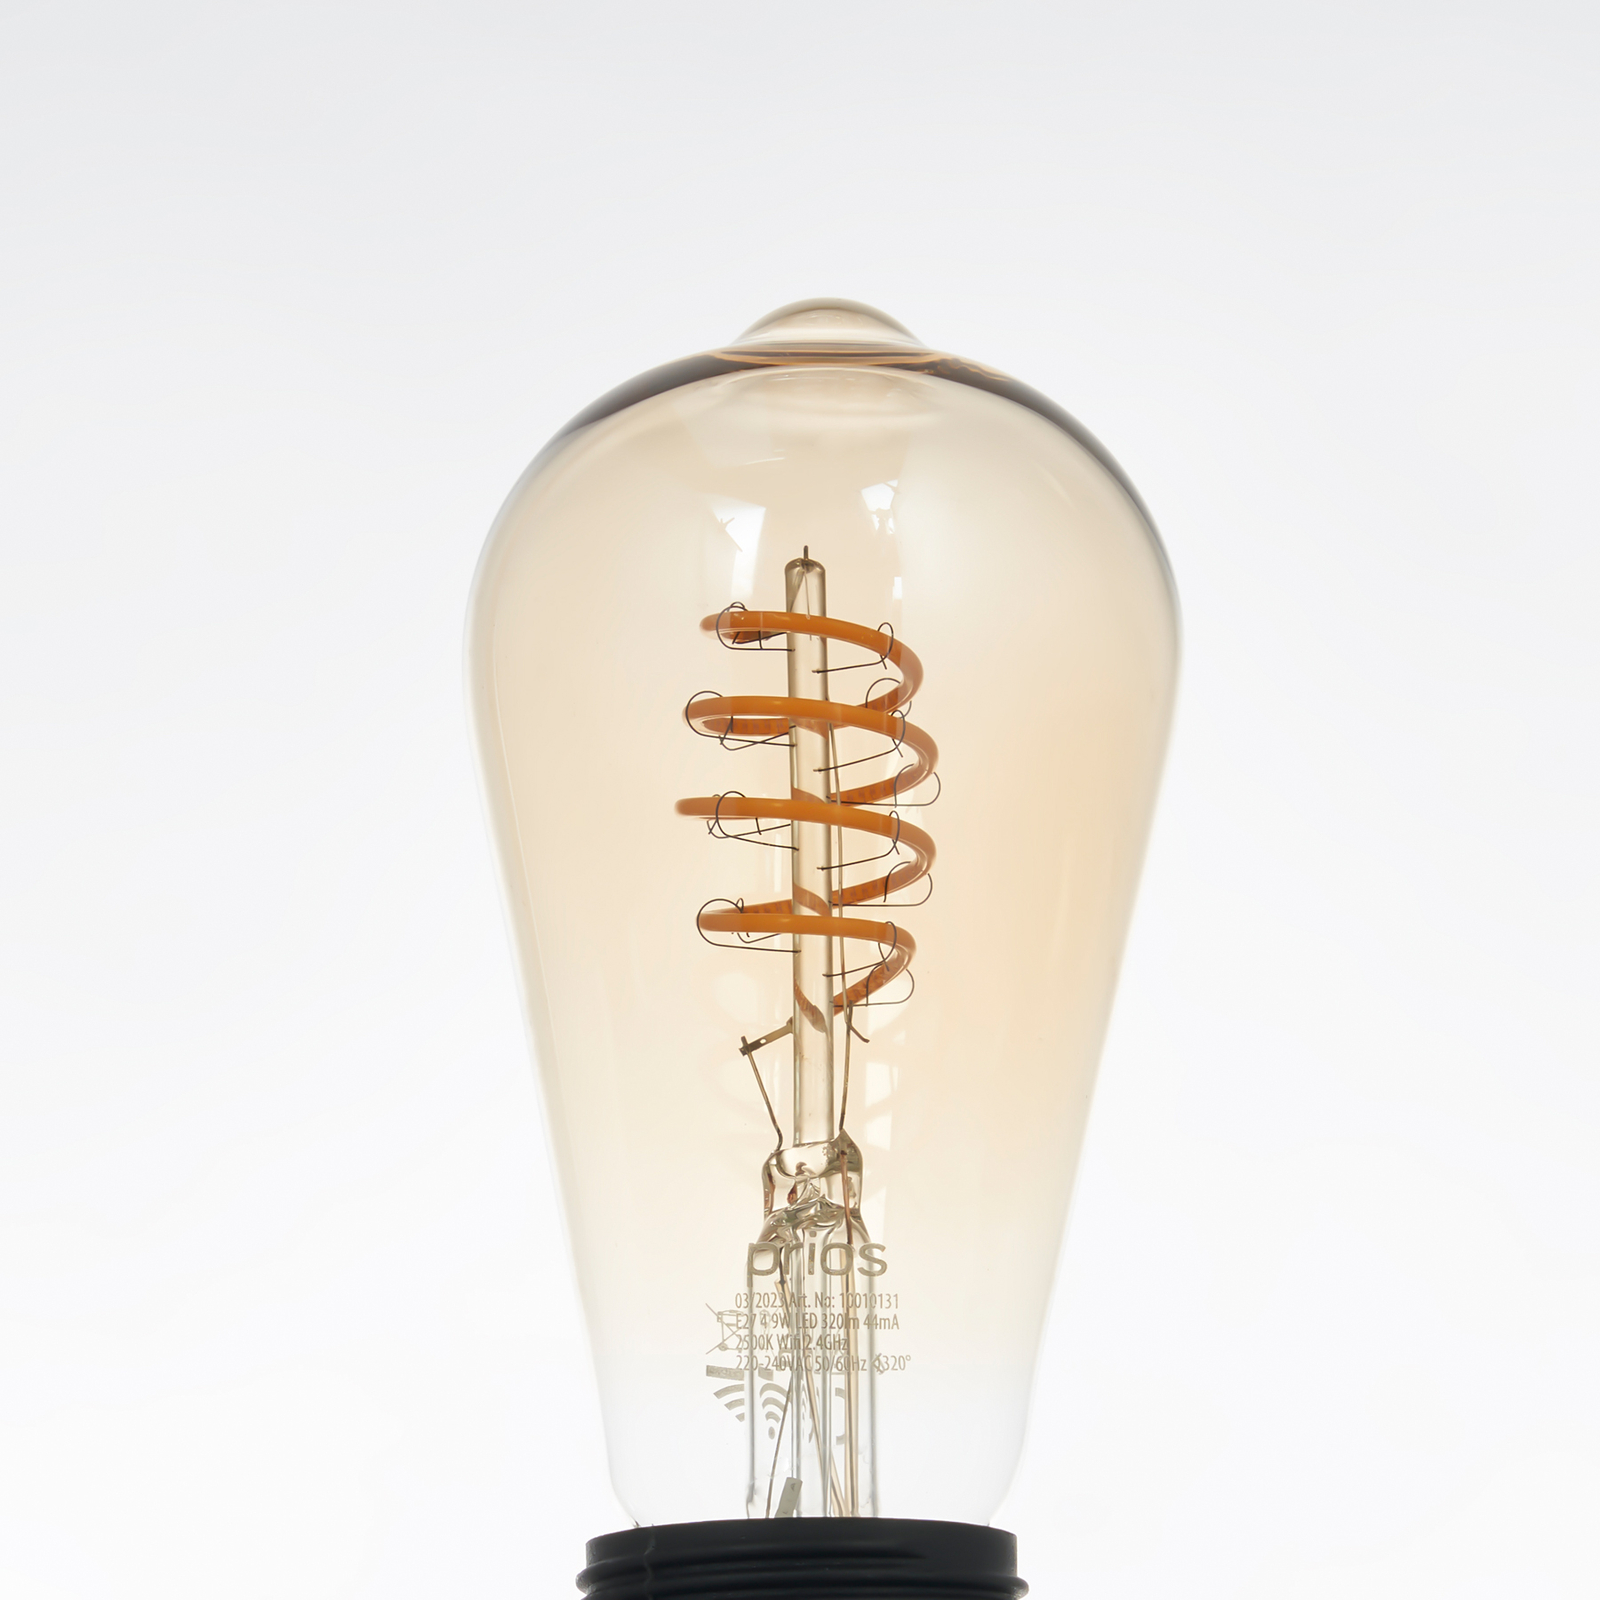 Smart LED lamp E27 ST64 4,9W WLAN amber